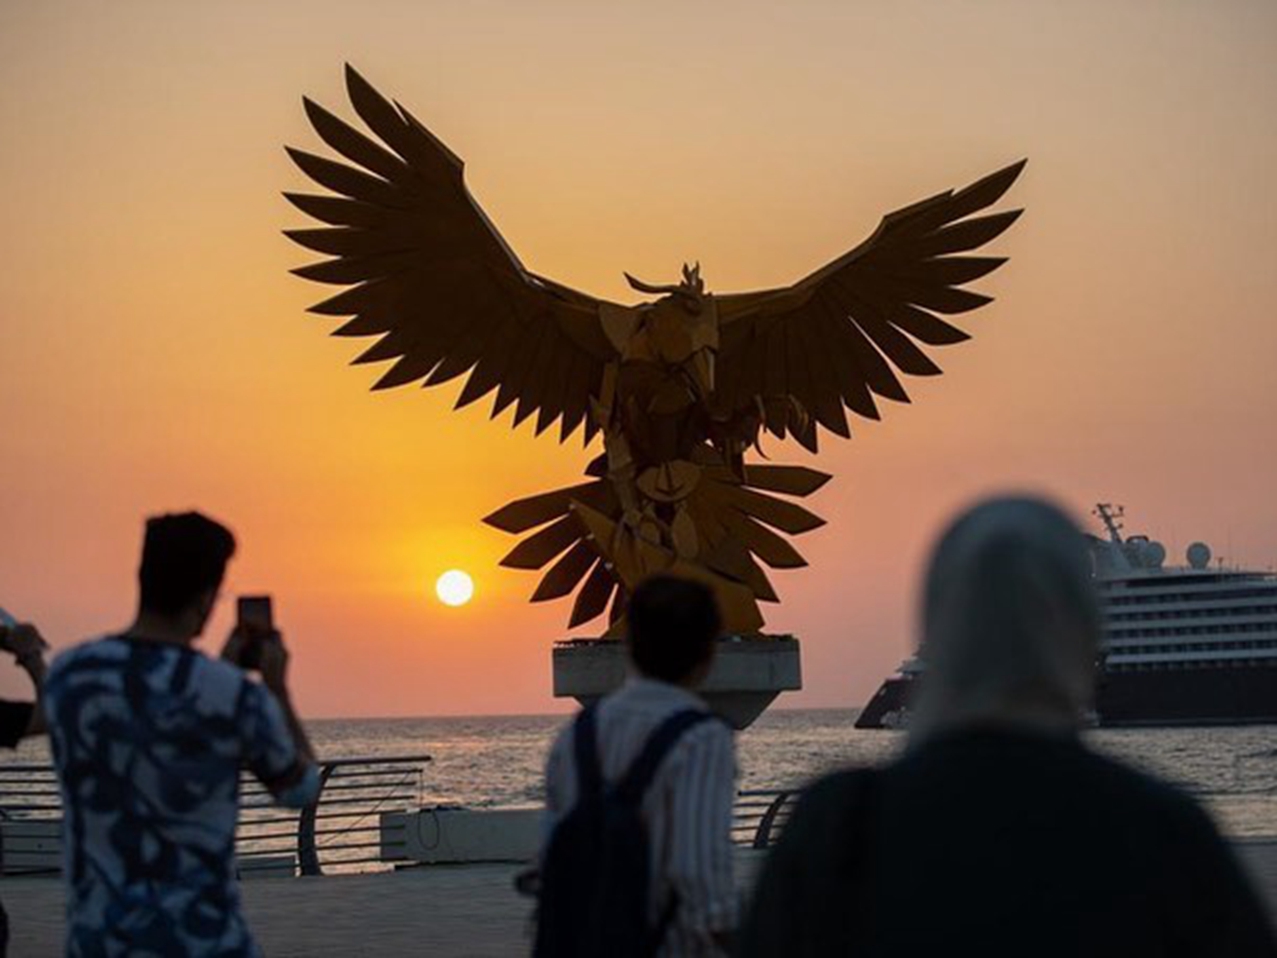 Large Golden Falcon Installed in Jeddah Art Promenade, Saudi Arabia